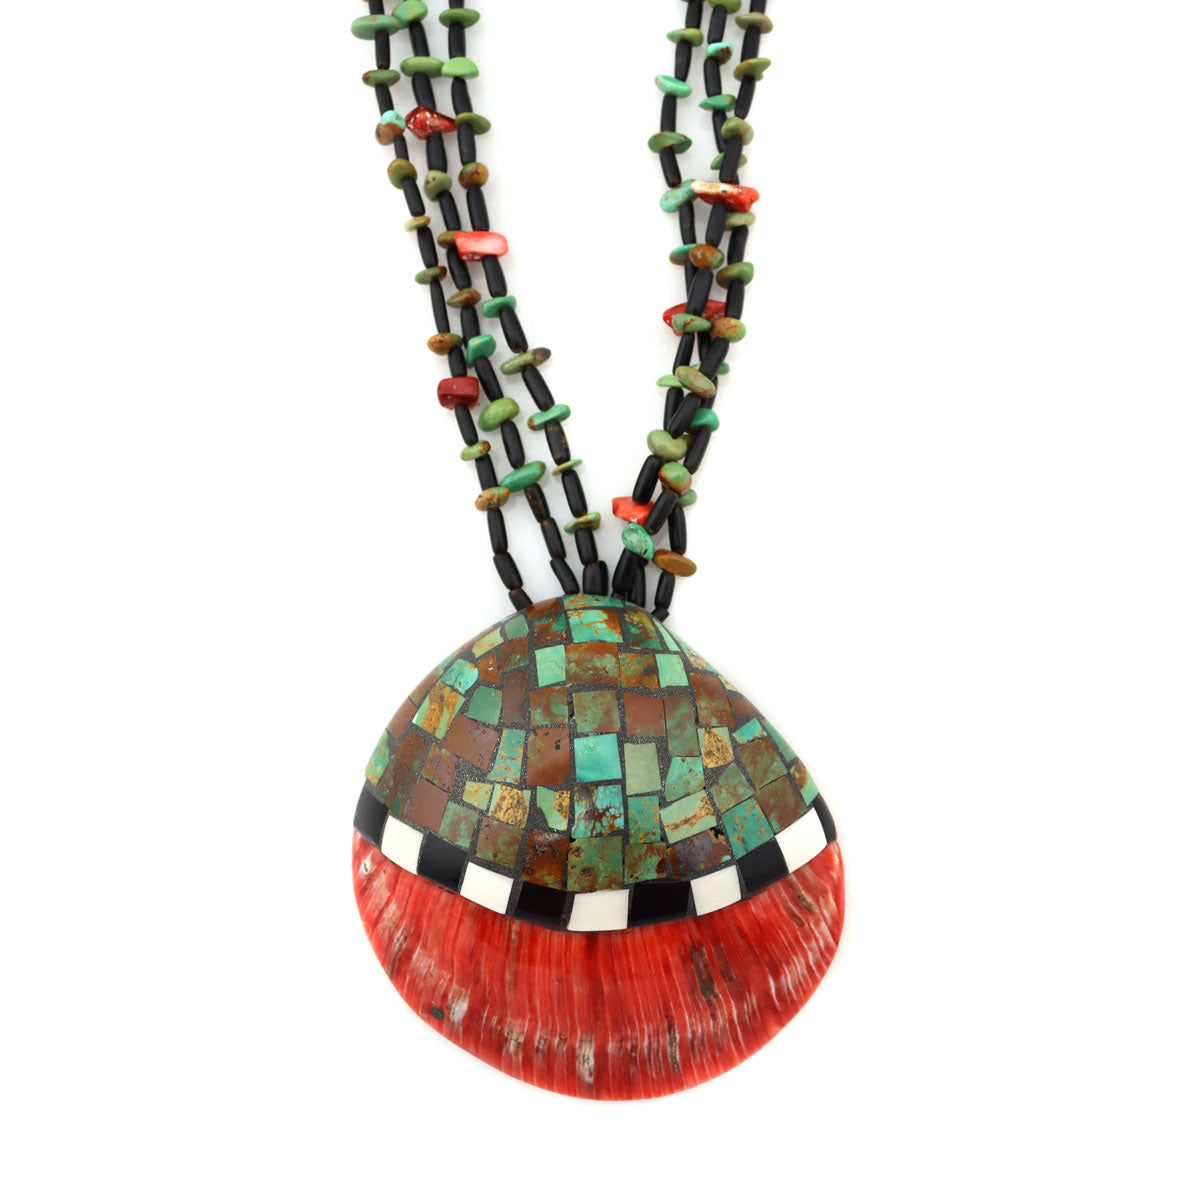 Santo Domingo (Kewa) Necklace with Shell Pendant, Contemporary, 28" length (J90106-011-030)1